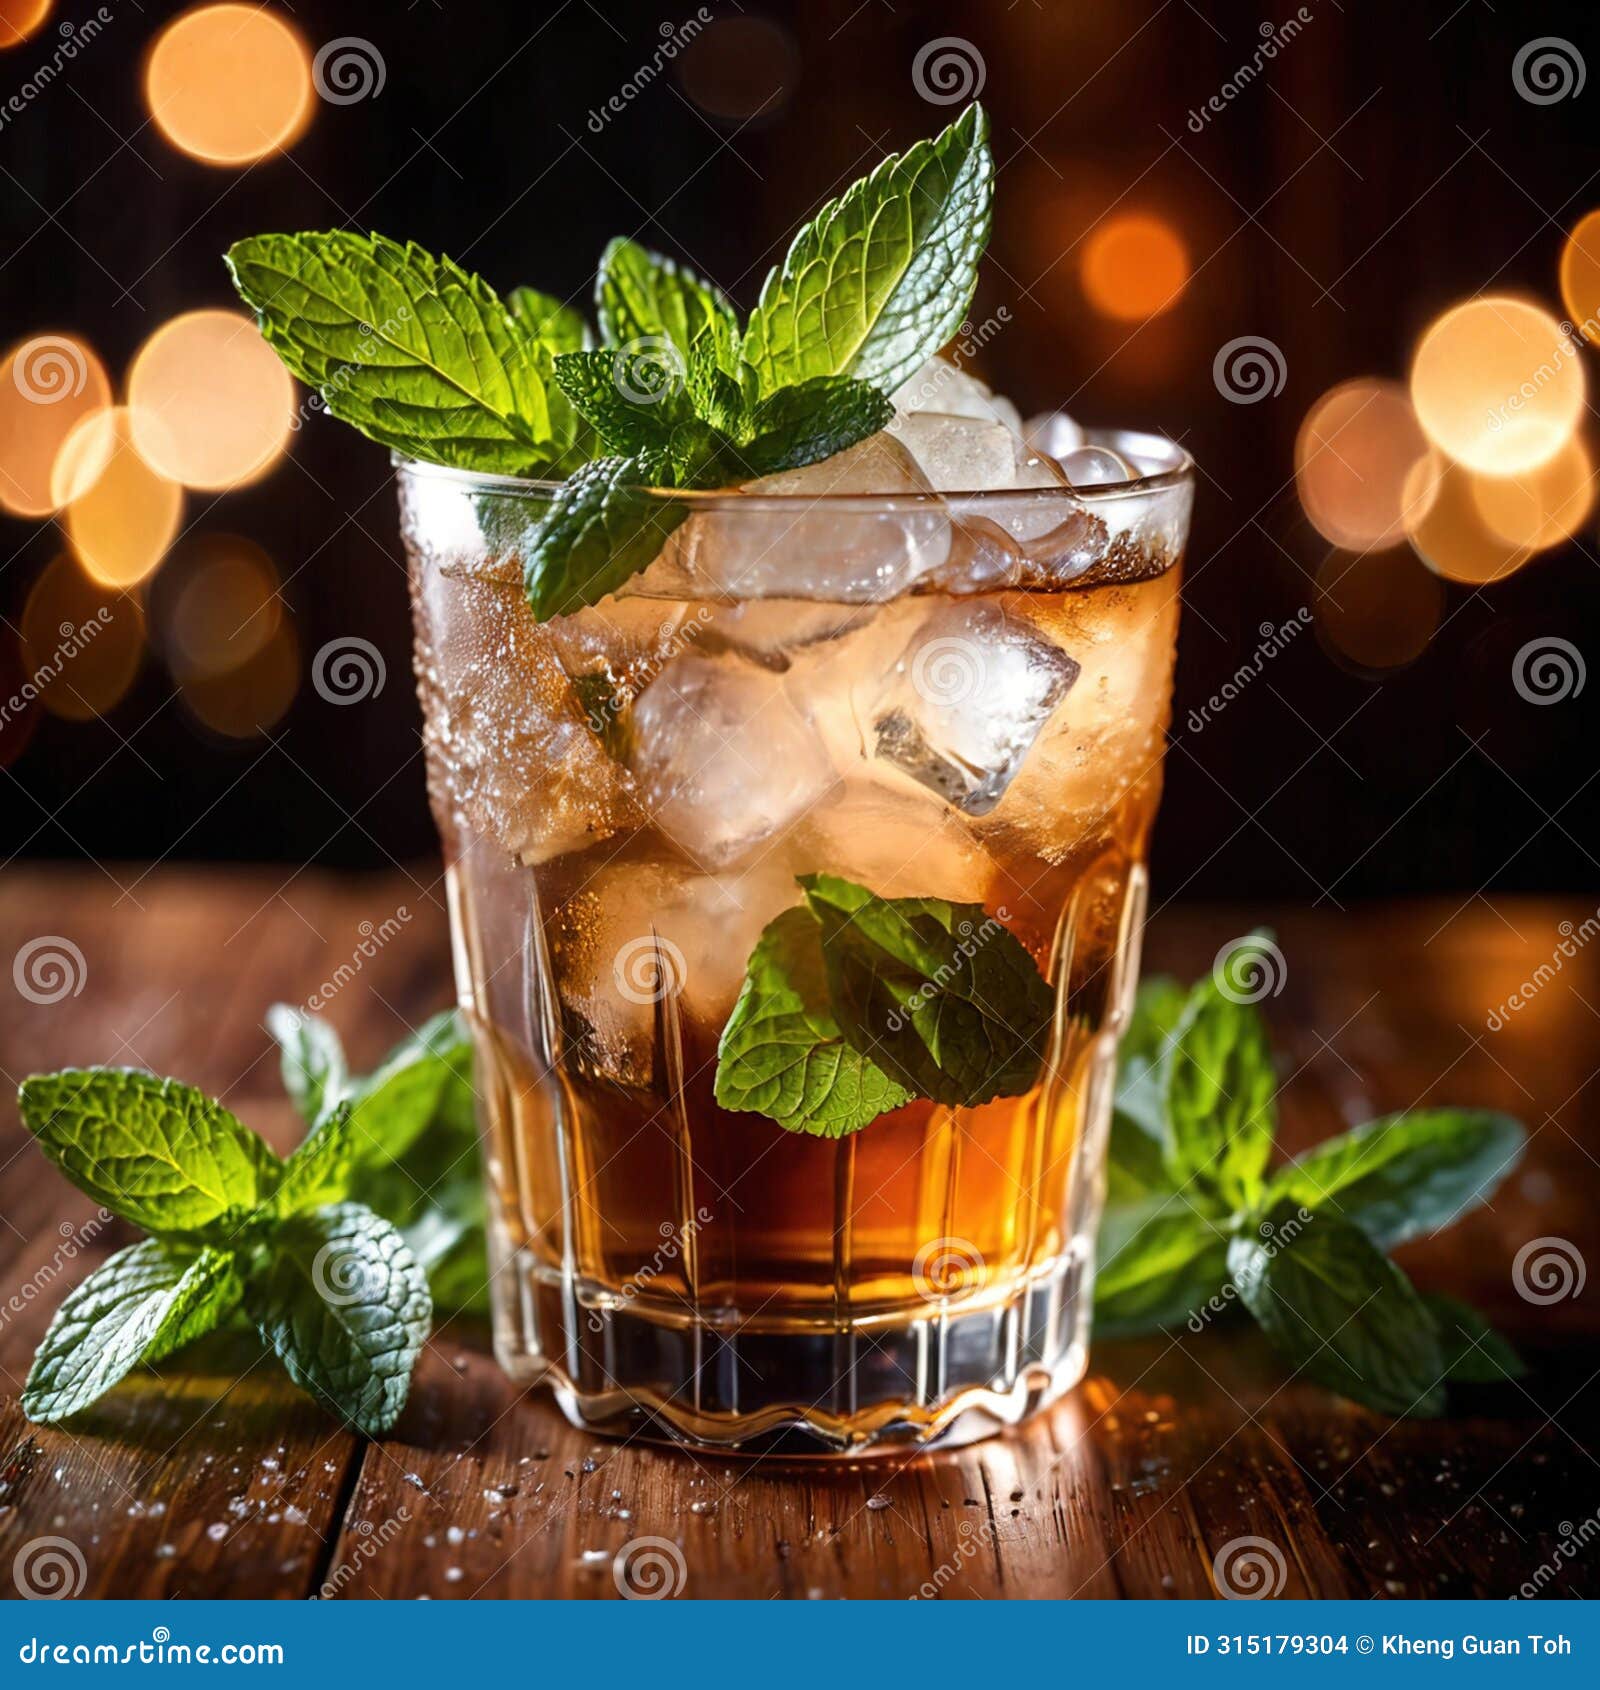 mint julep, cocktail liquer alcoholic liquor mixed drink in bar pub